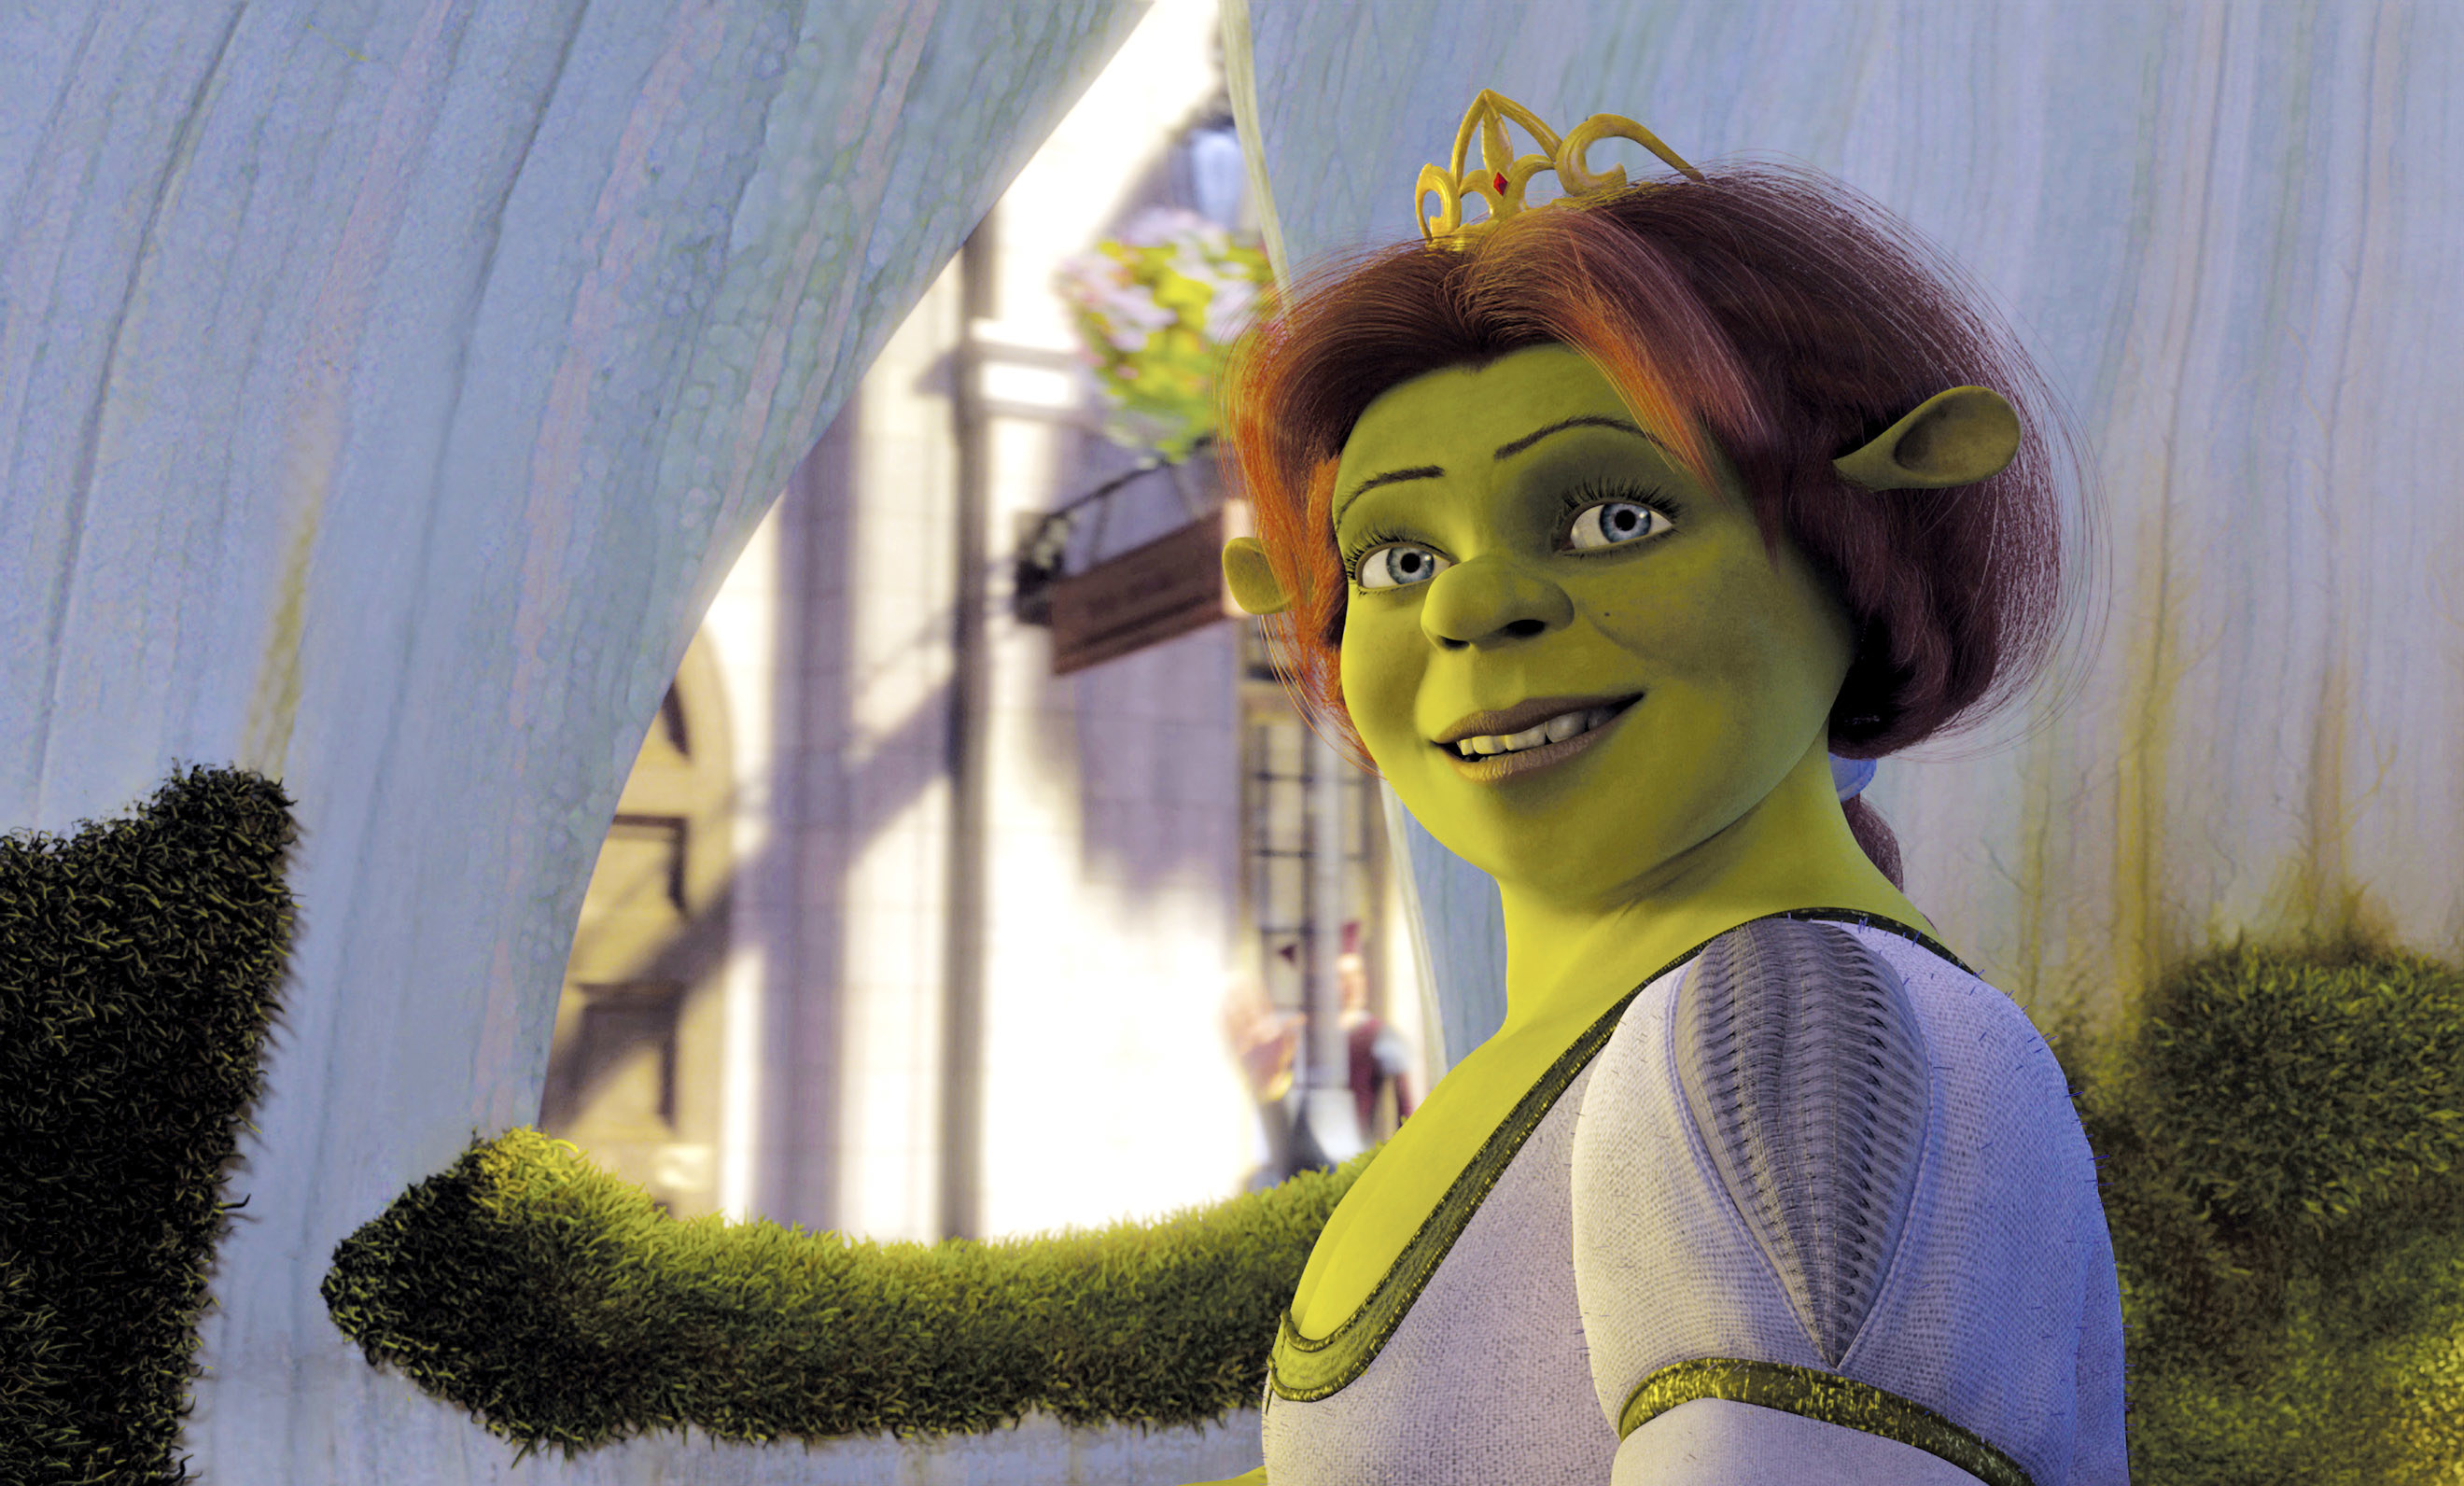 The cartoon character Fiona in Shrek